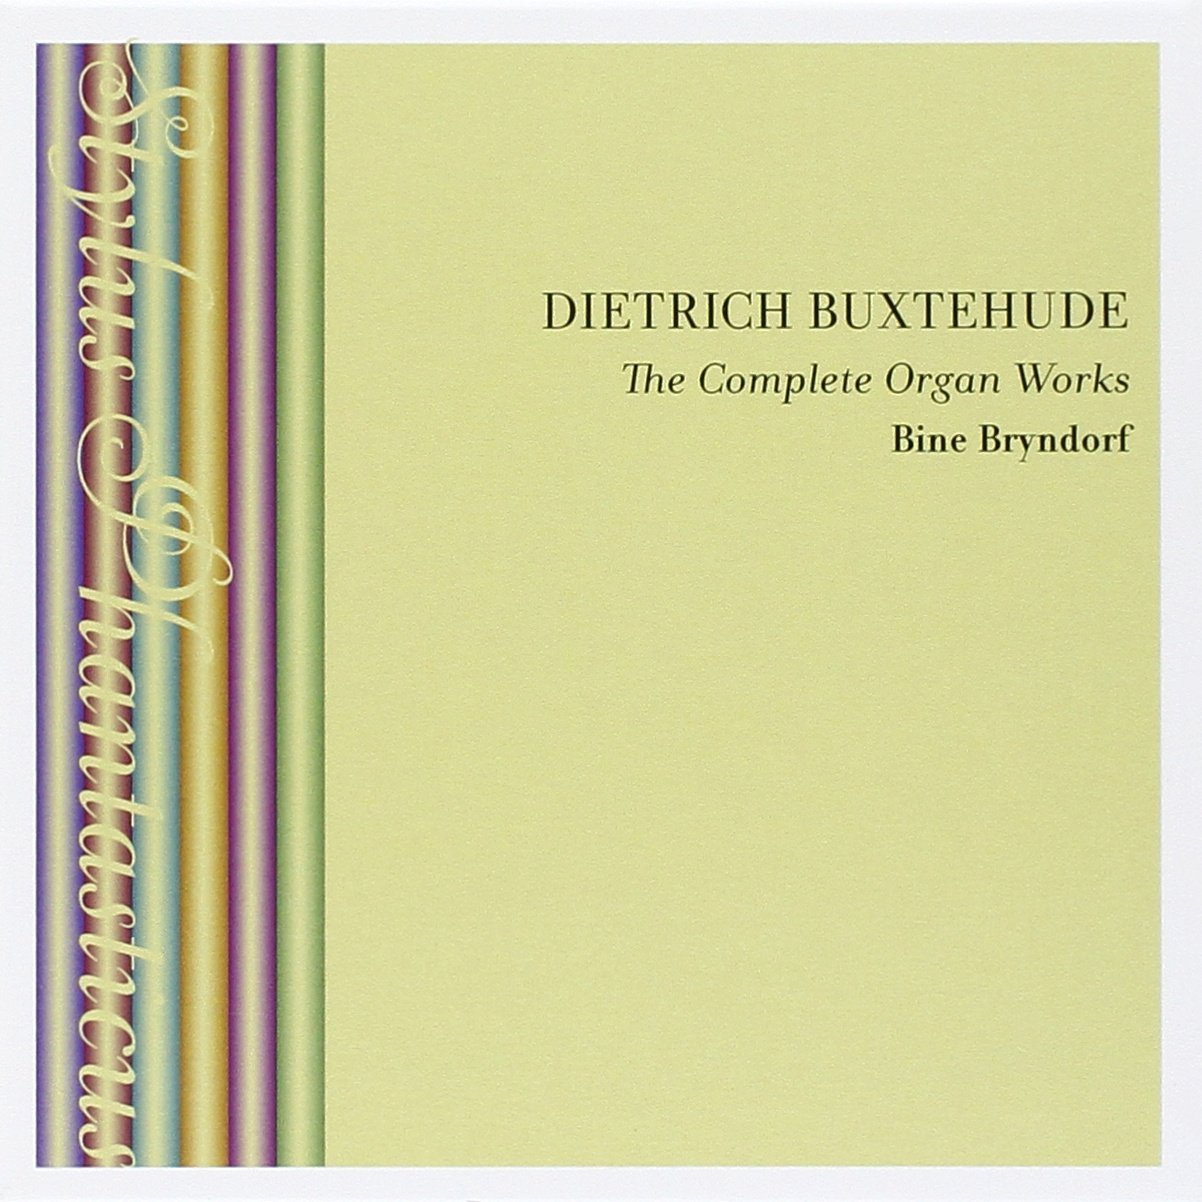 Dacapo Buxtehude - organ works | bine bryndorf, dietrich buxtehude